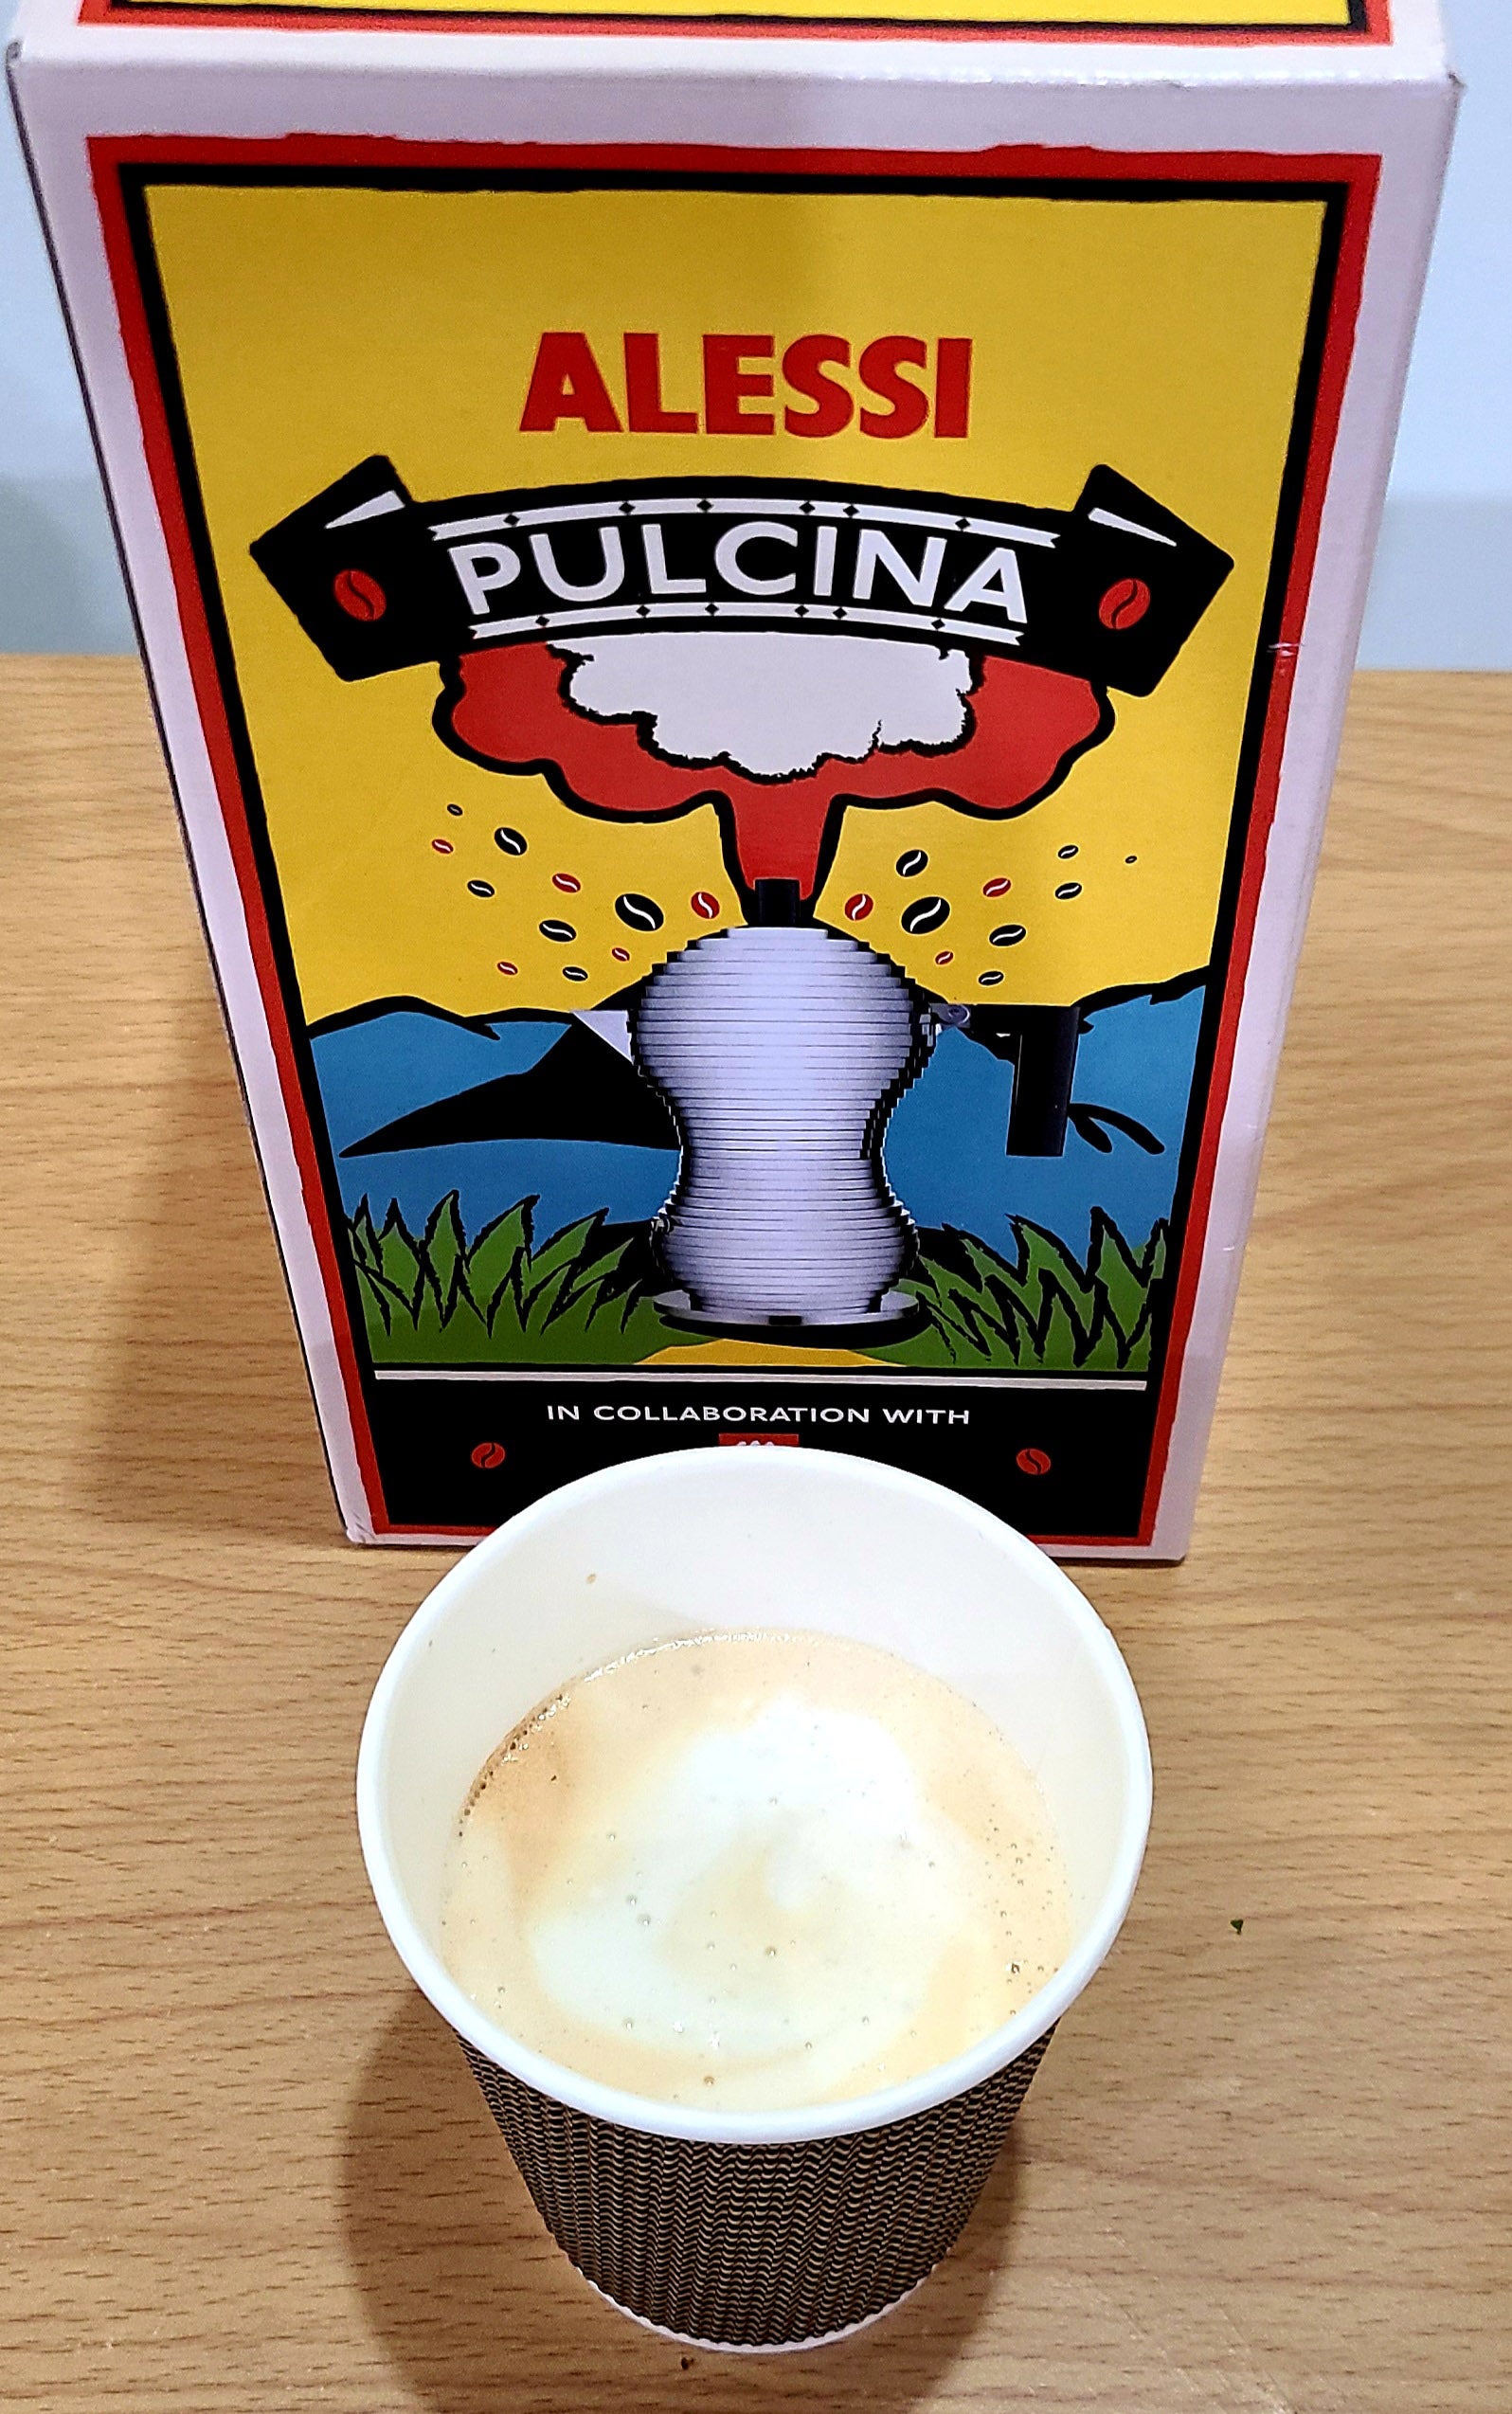 Alessi - Pulcina Milk frother